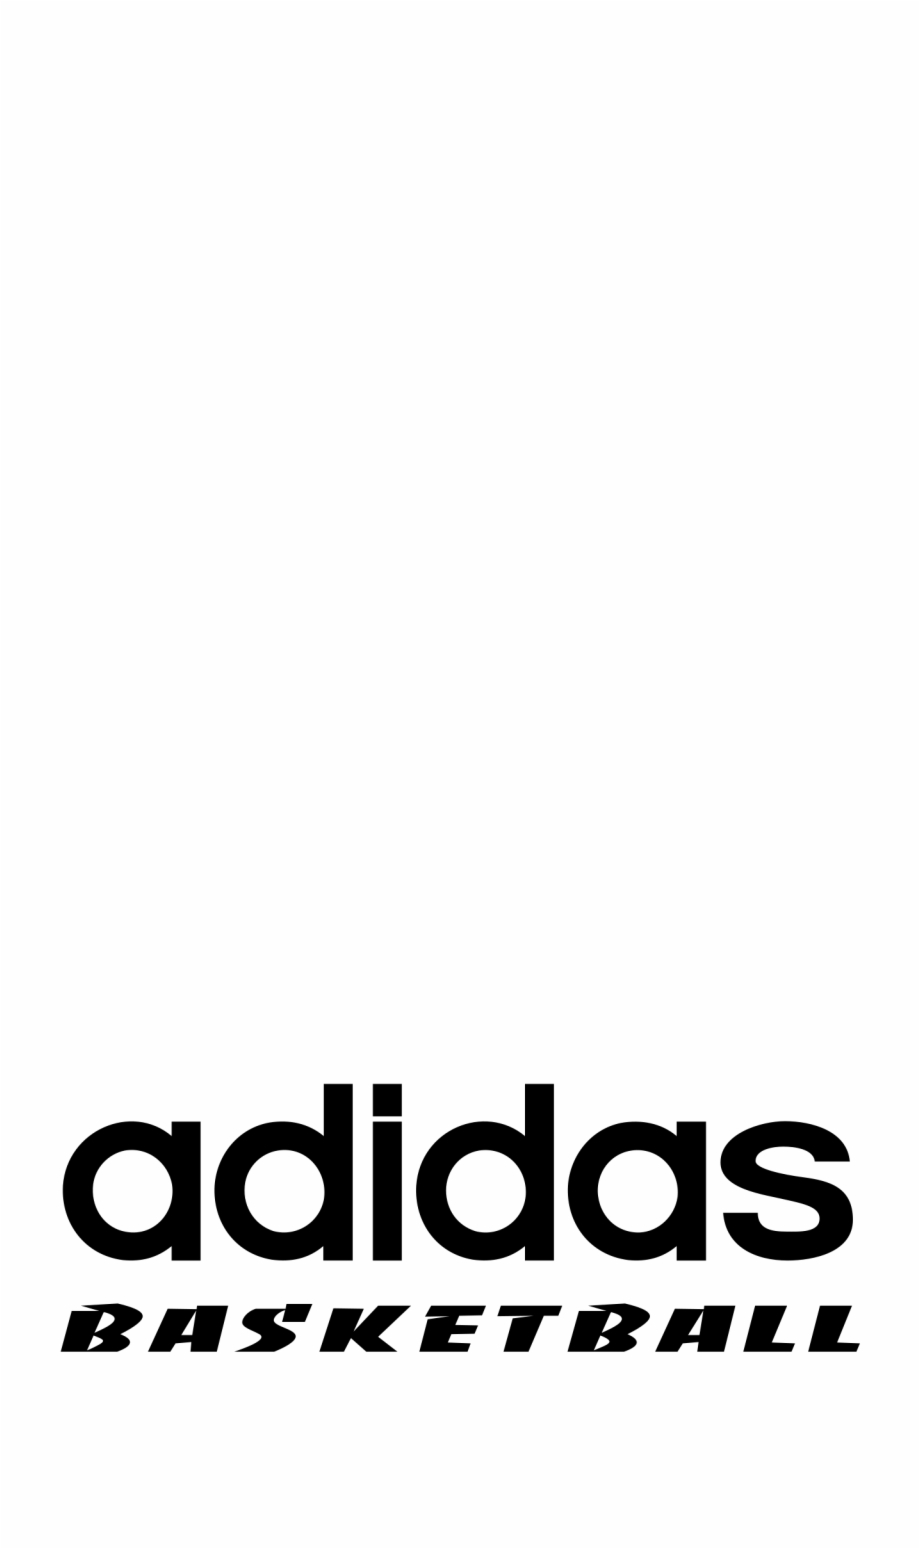 Adidas White Logo Png Adidas Wimbledon